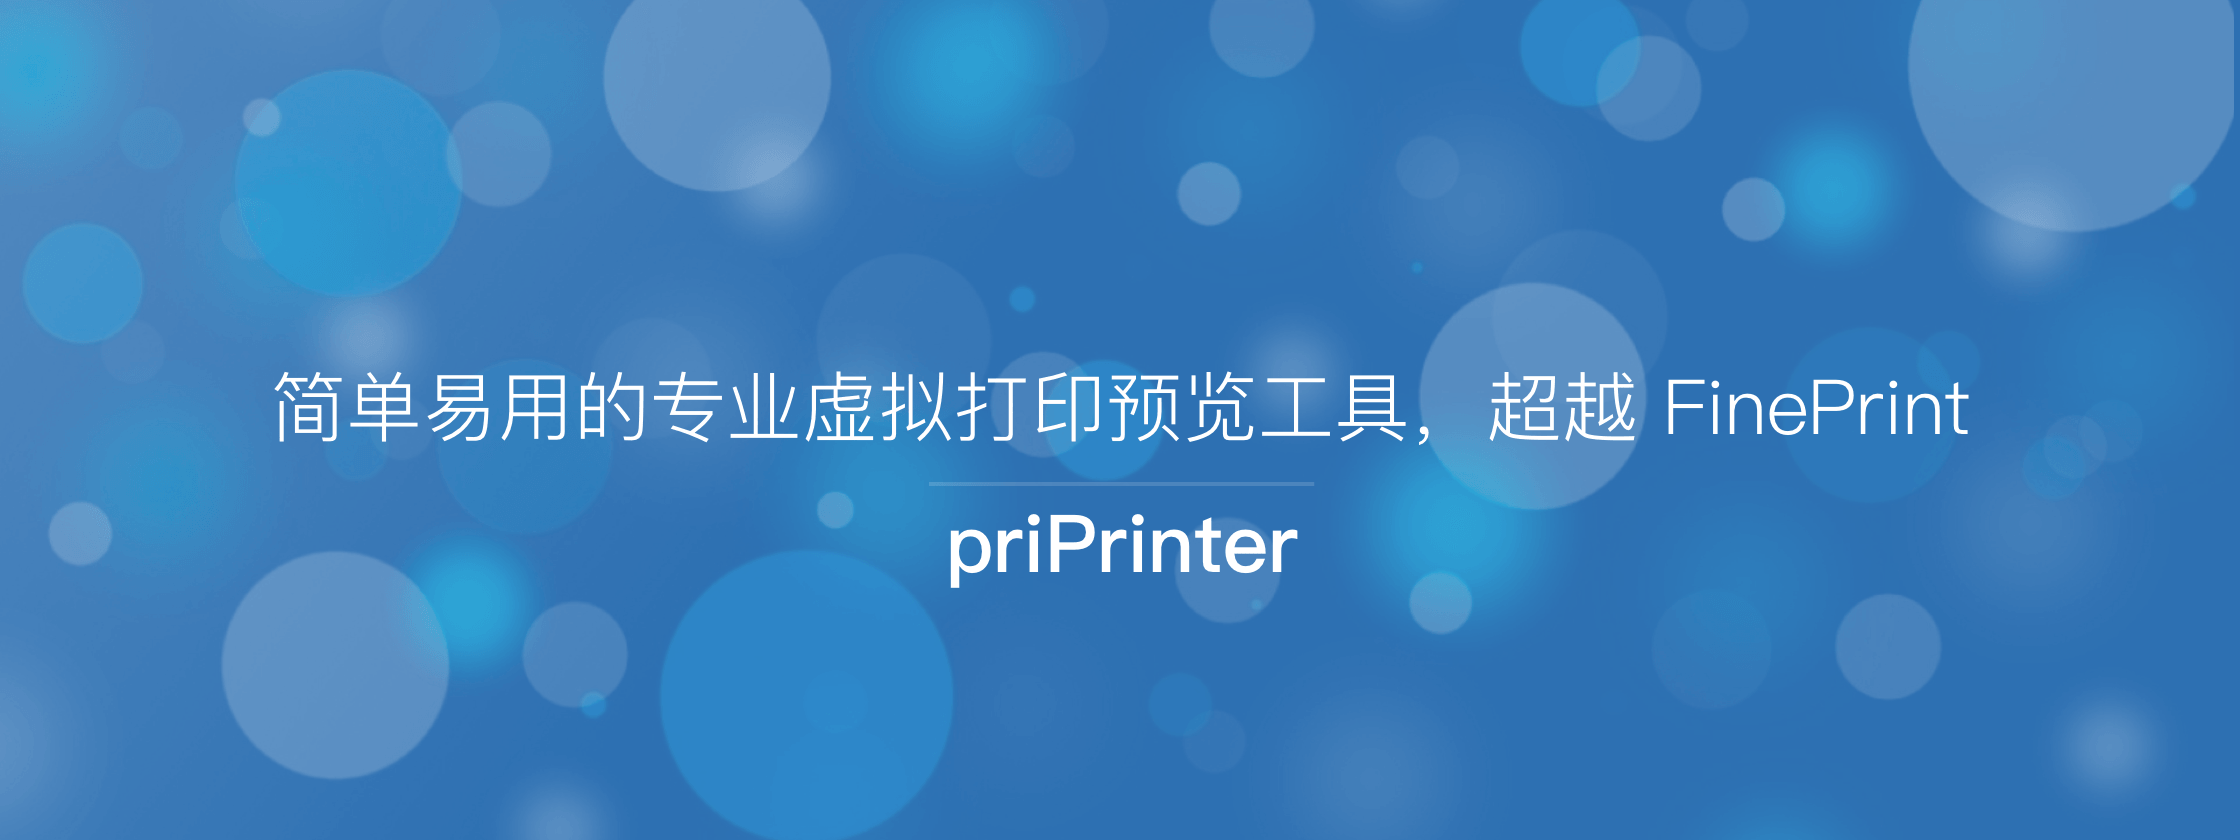 priPrinter 中文版 – 简单易用的专业虚拟打印预览工具，超越 FinePrint